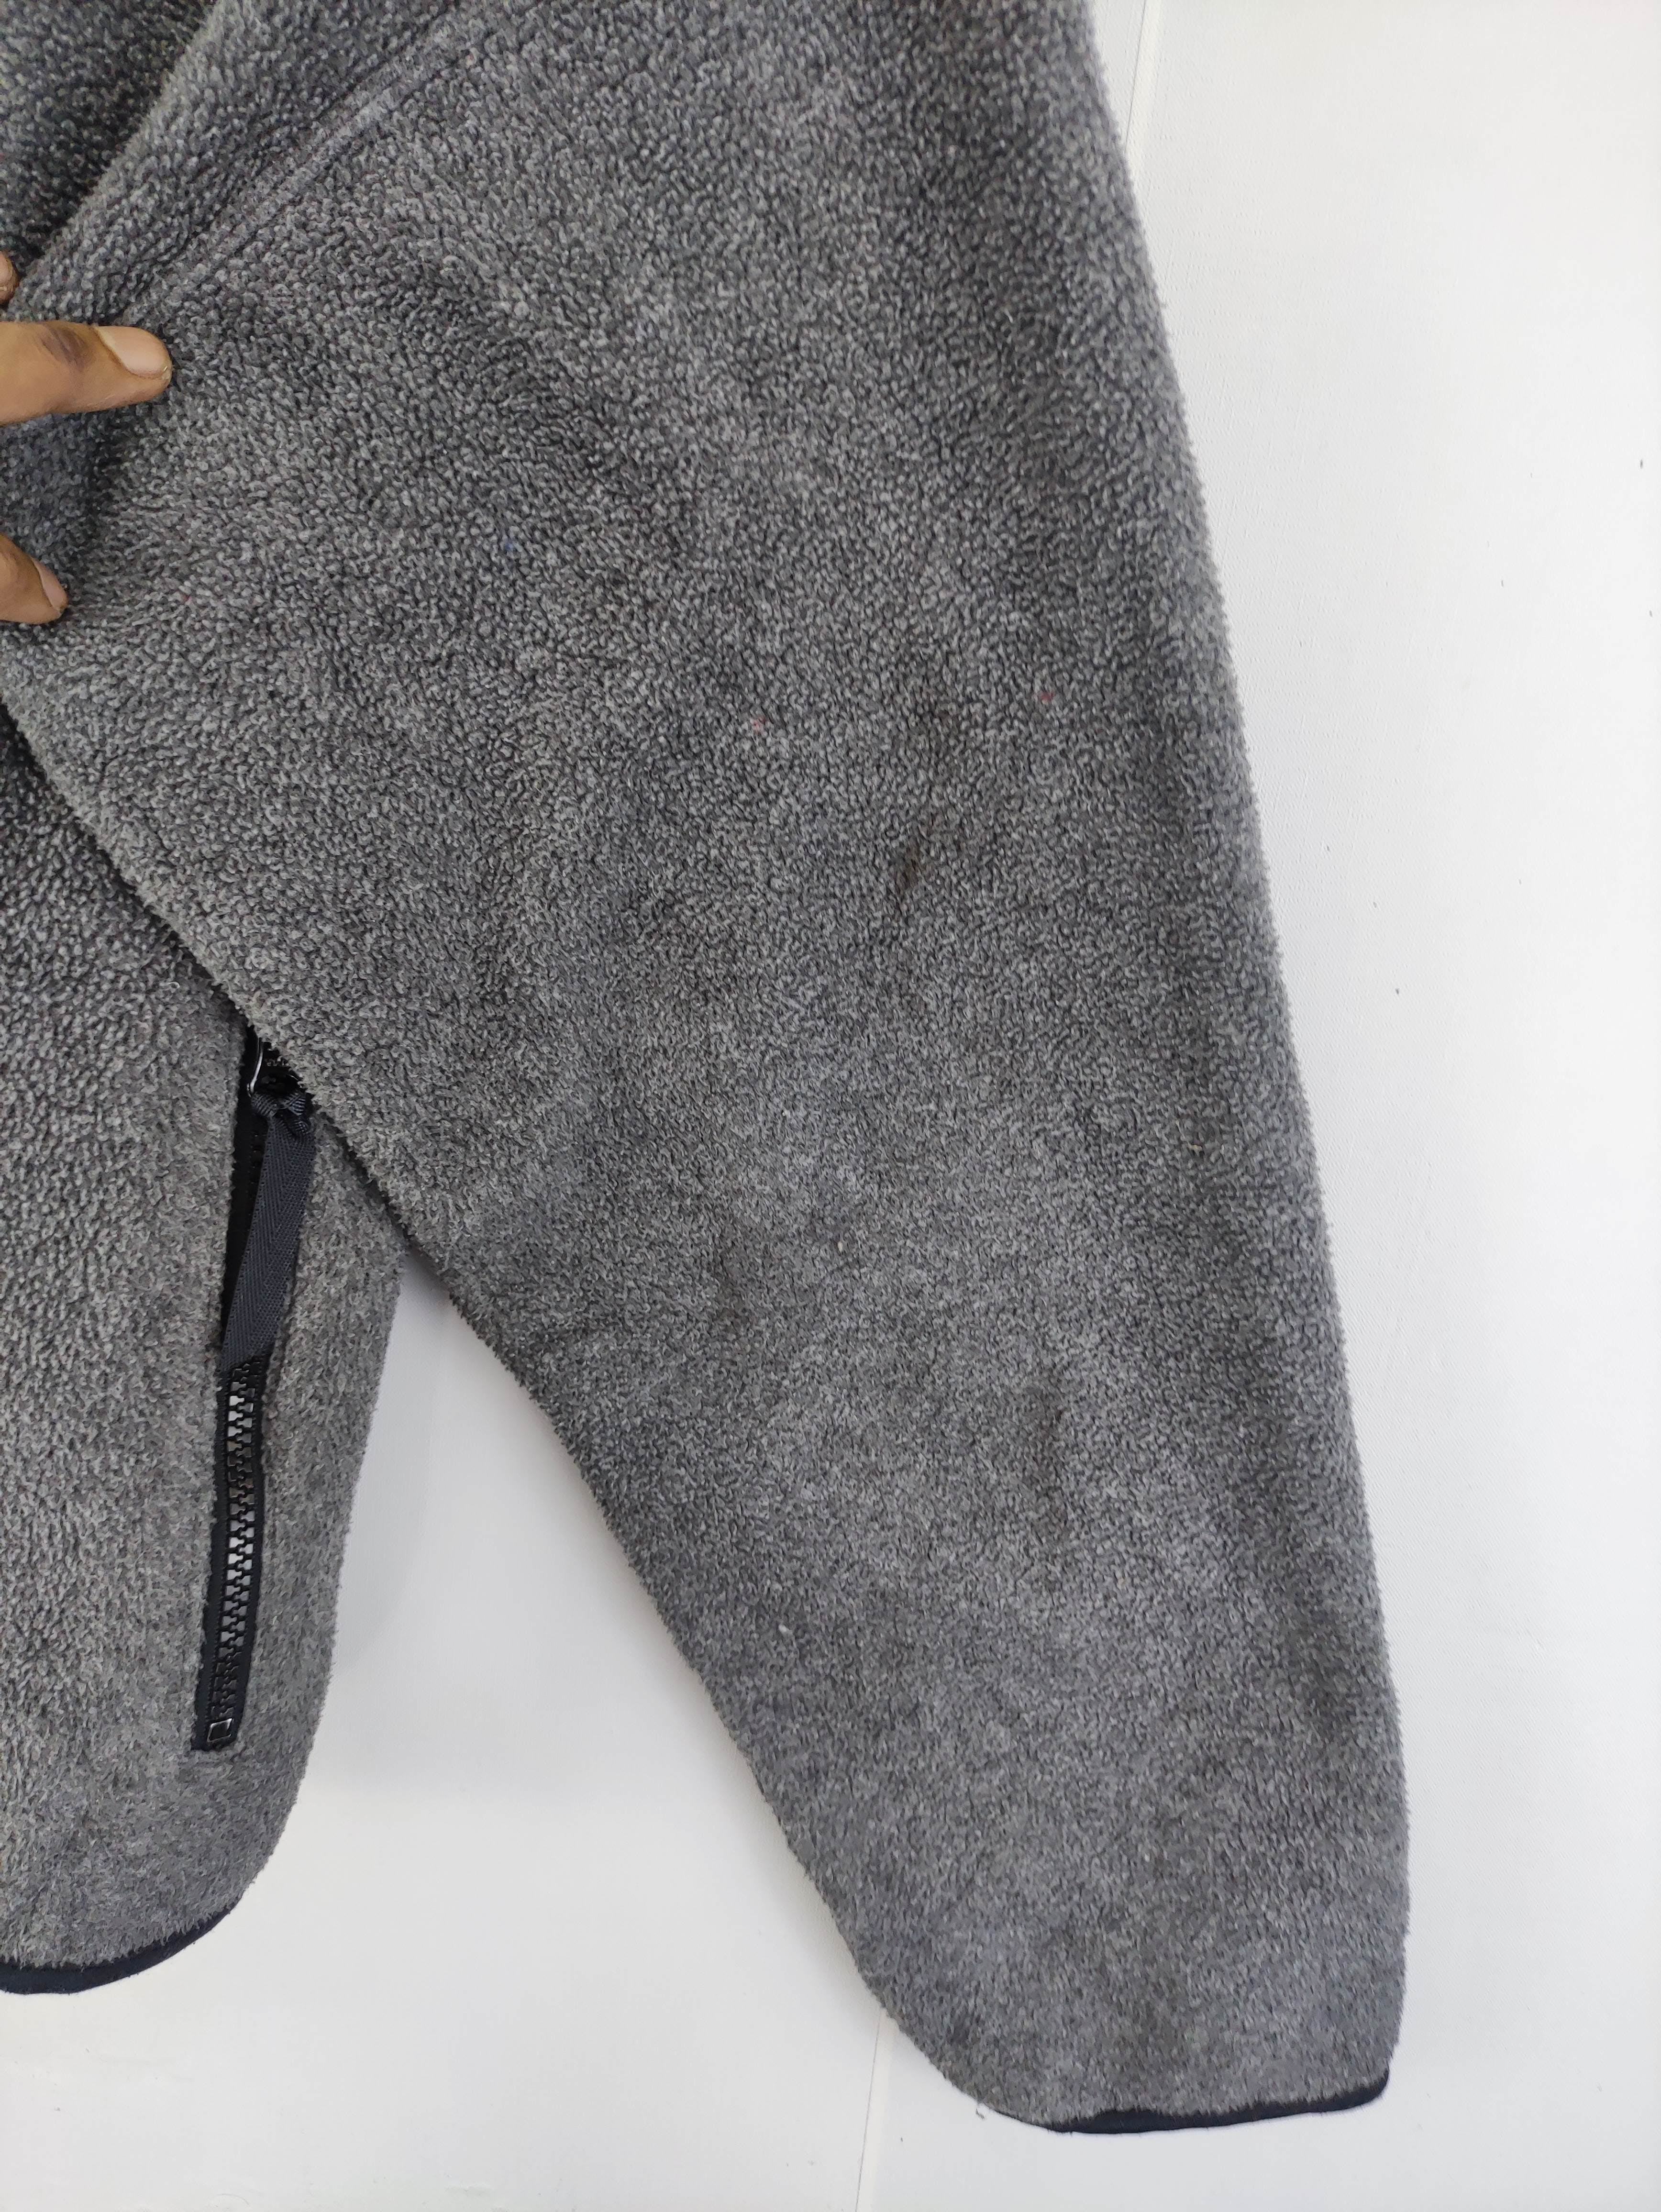 Vintage Woolrich Fleece Sweater Half Snap Button - 7